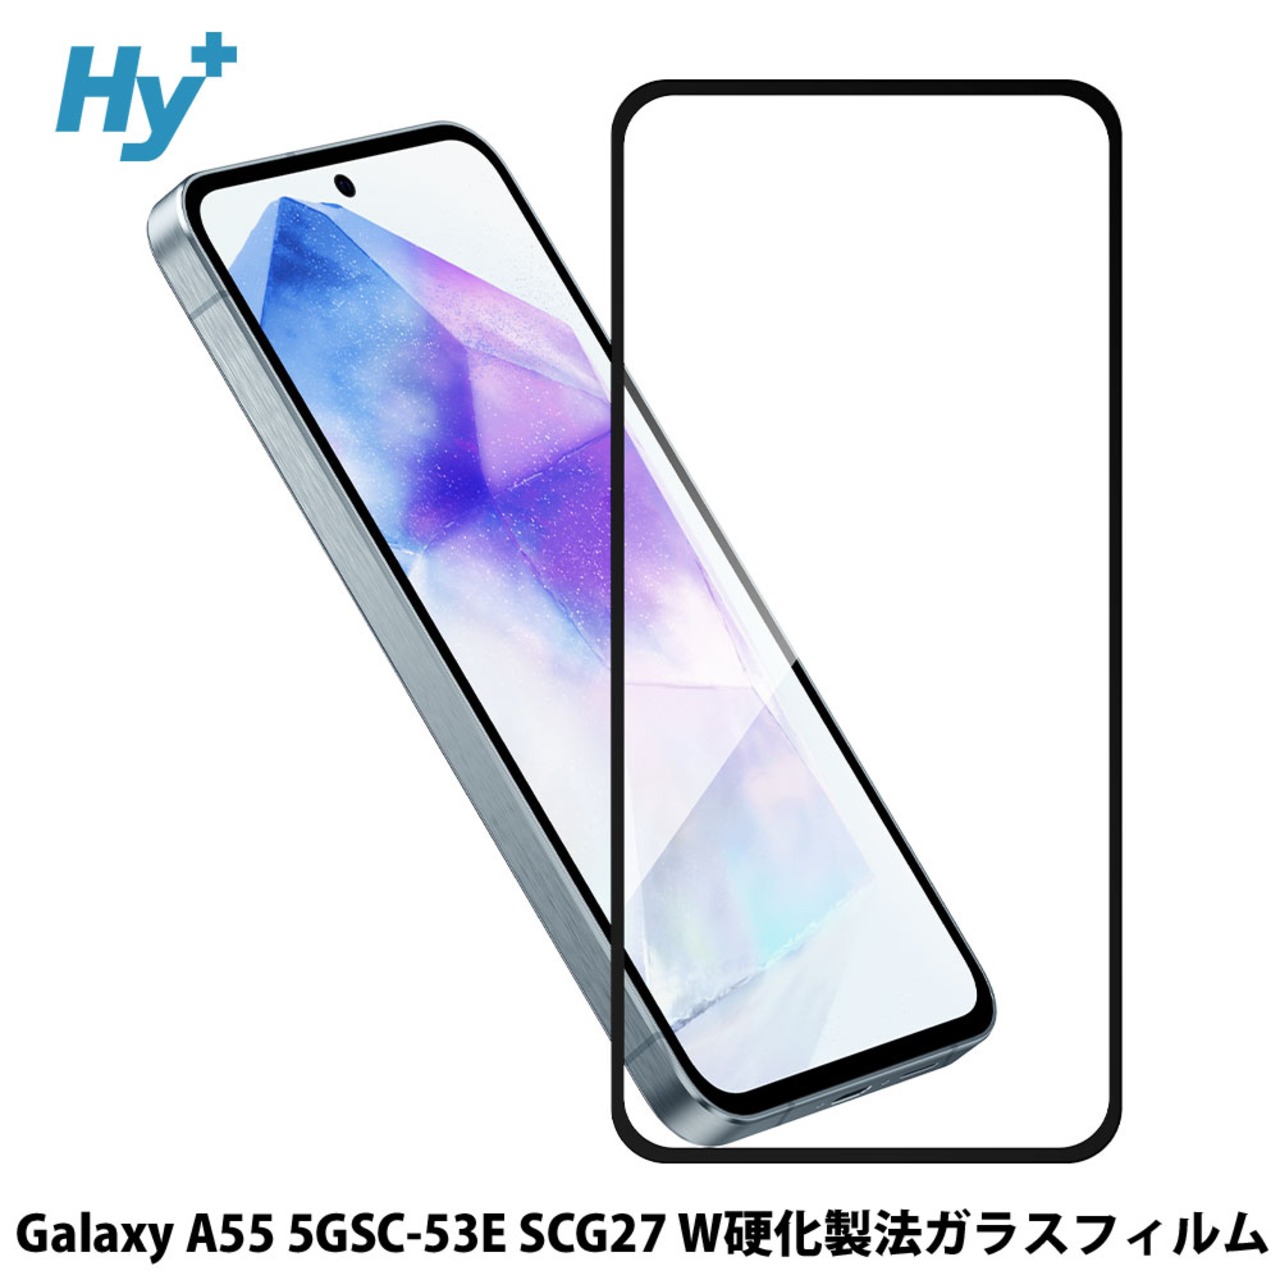 Hy+ Galaxy A55 フィルム ガラスフィルム W硬化製法 一般ガラスの3倍強度 全面保護 全面吸着 日本産ガラス使用 厚み0.33mm ブラック